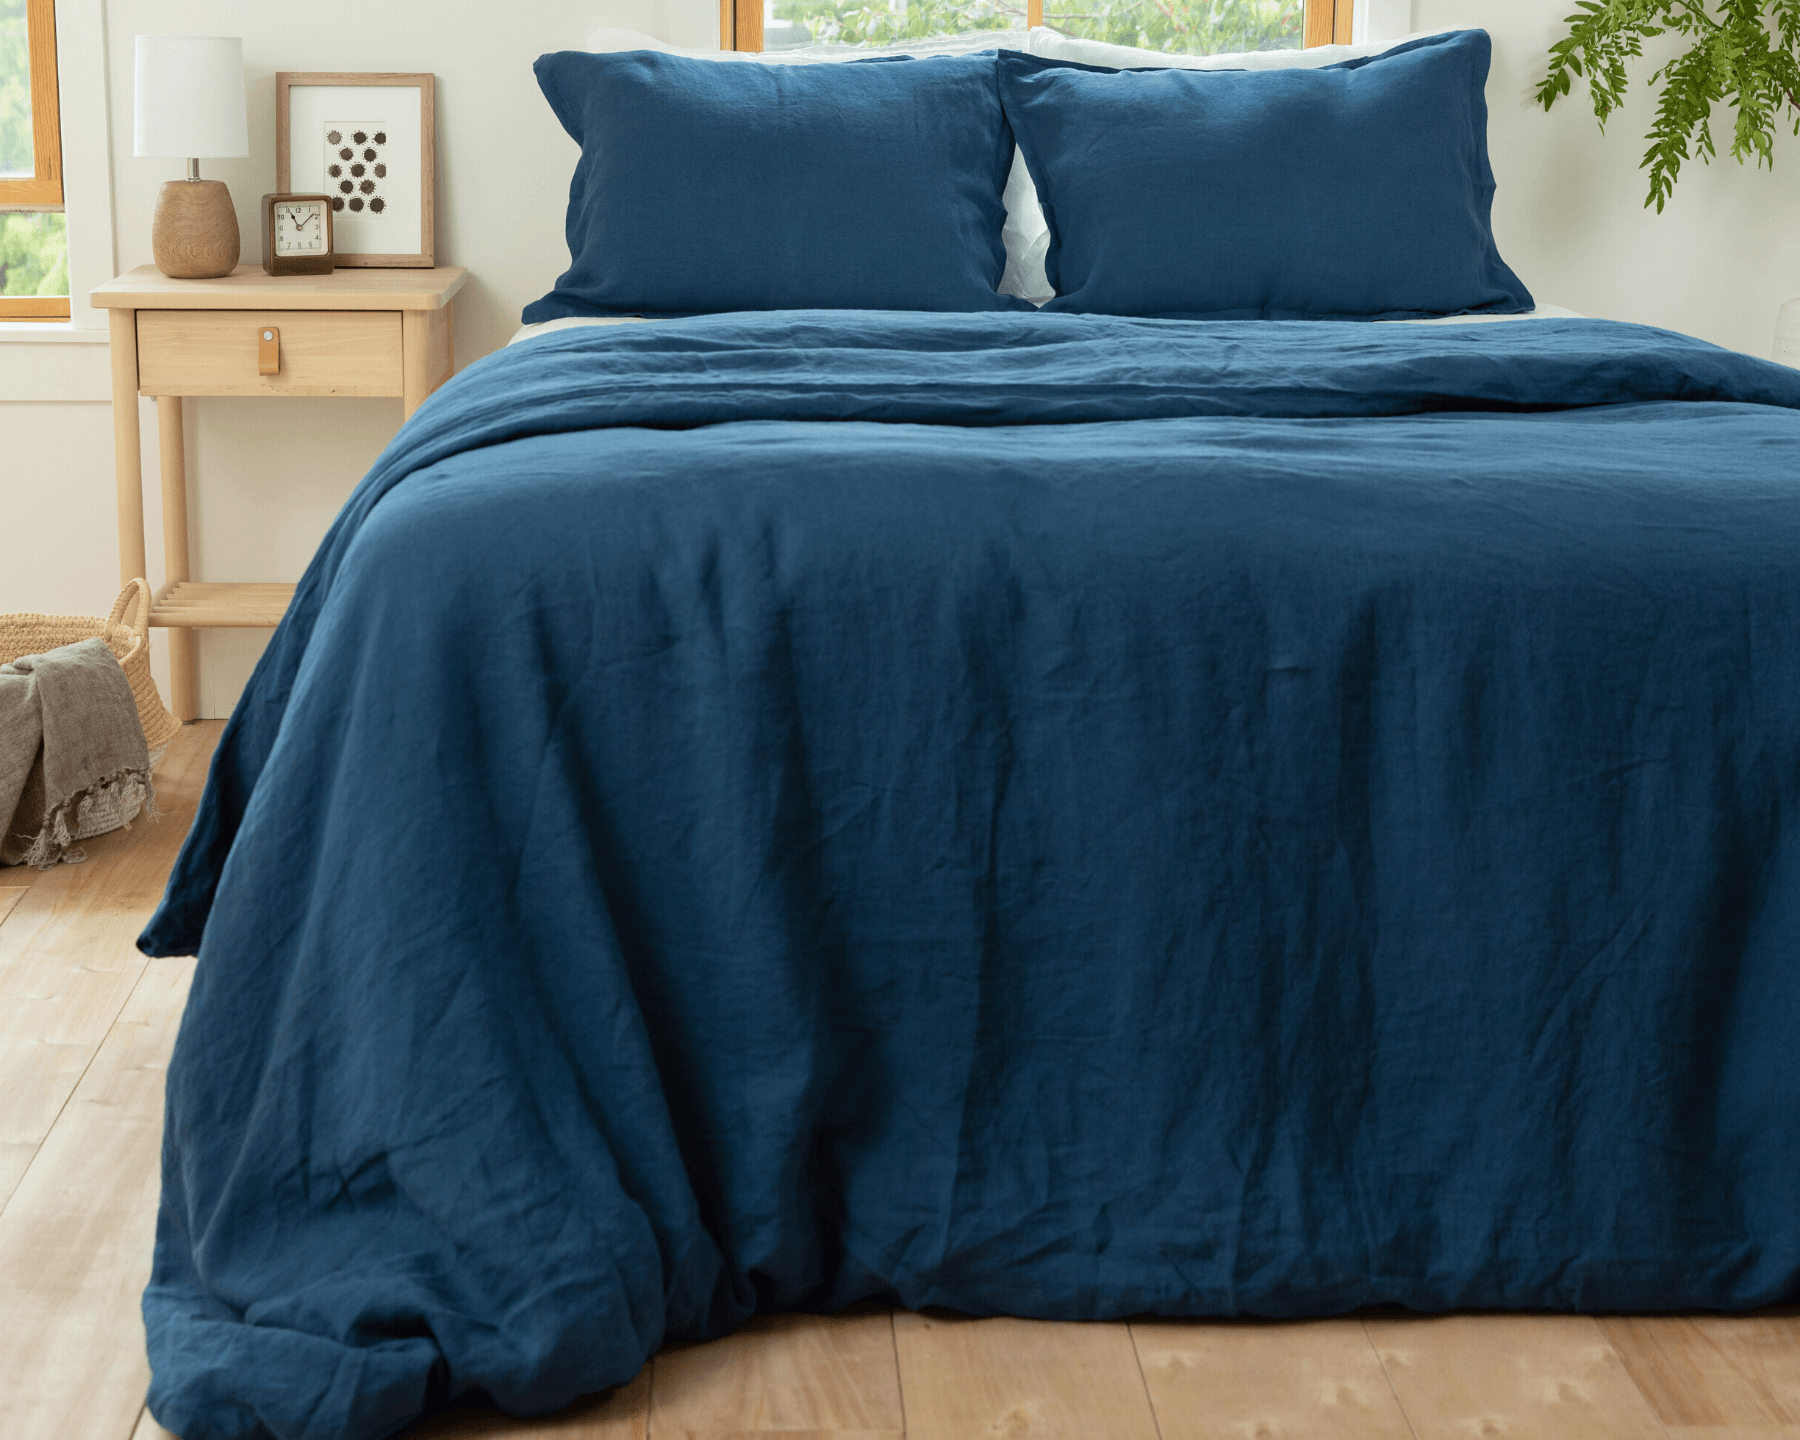 Navy blue organic European linen duvet cover set with two matching pillowcases